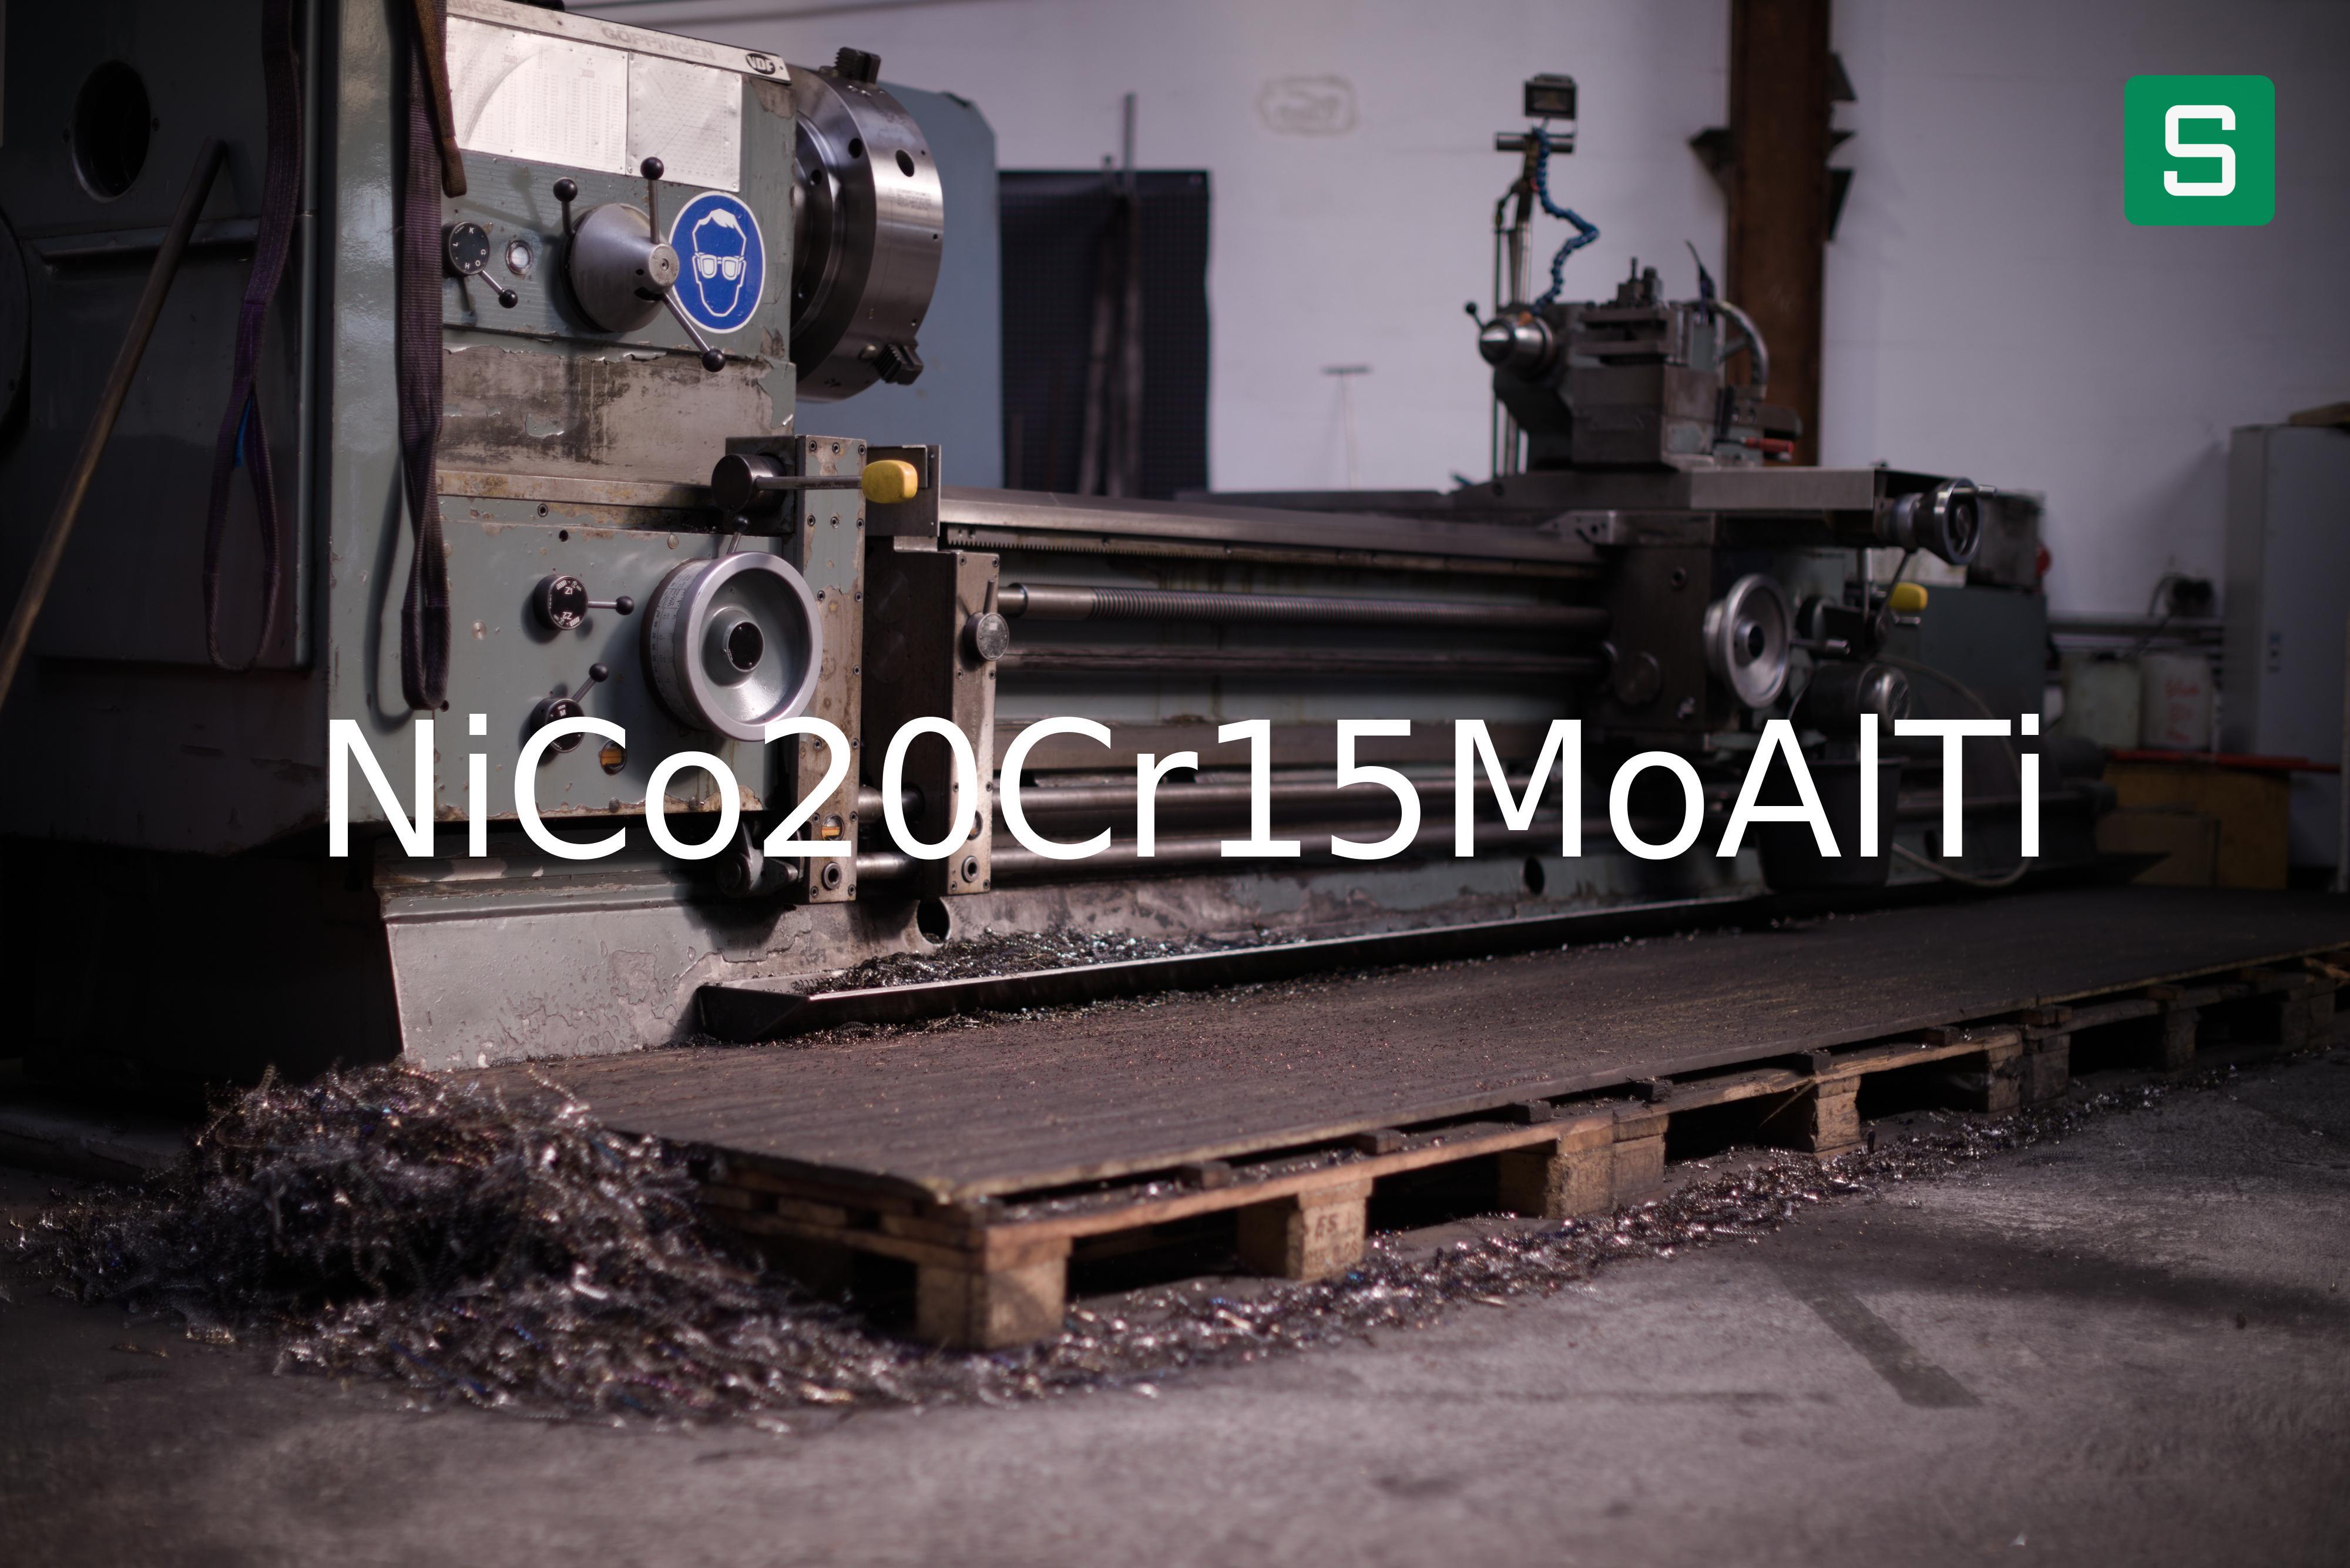 Steel Material: NiCo20Cr15MoAlTi